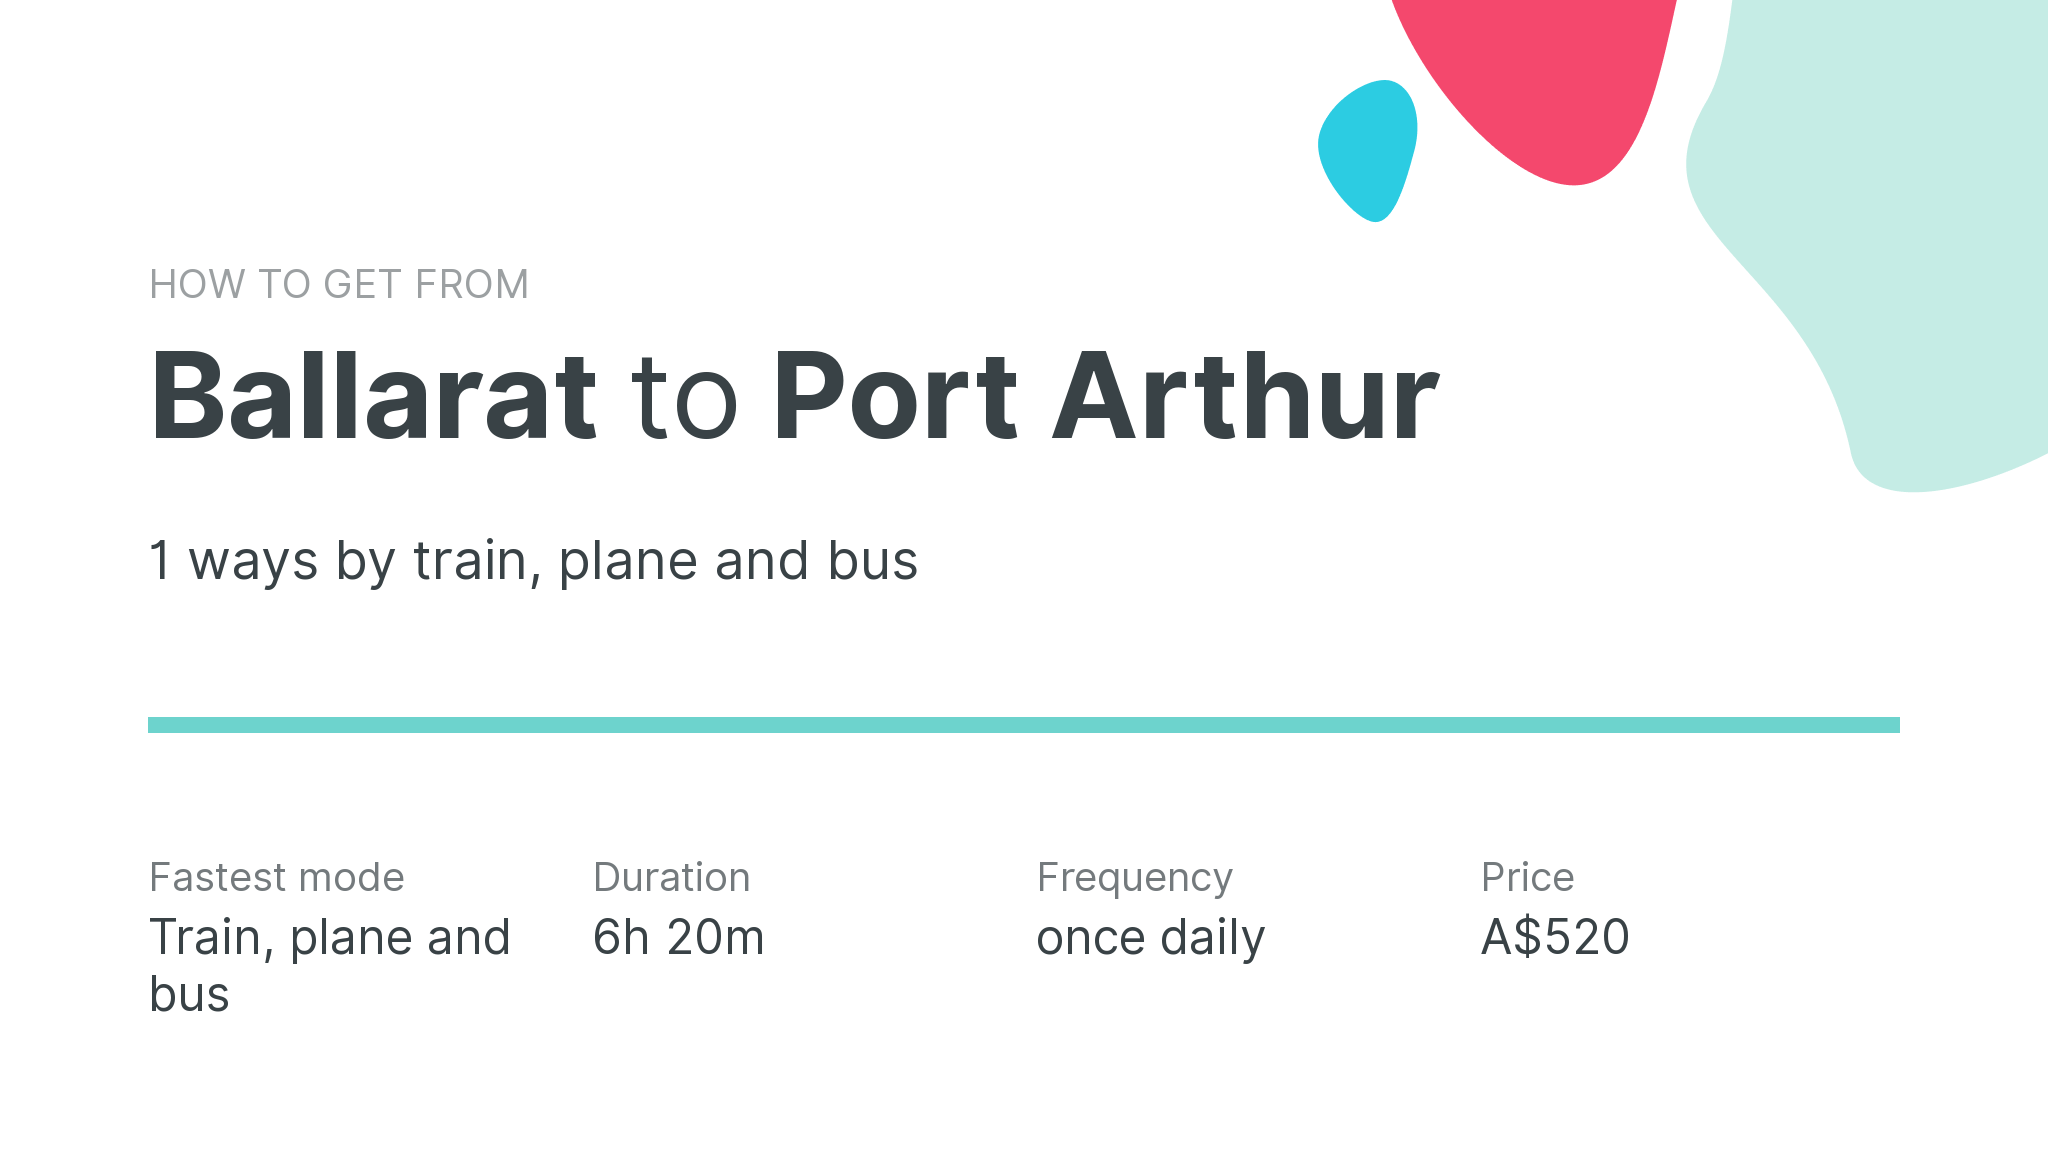 How do I get from Ballarat to Port Arthur